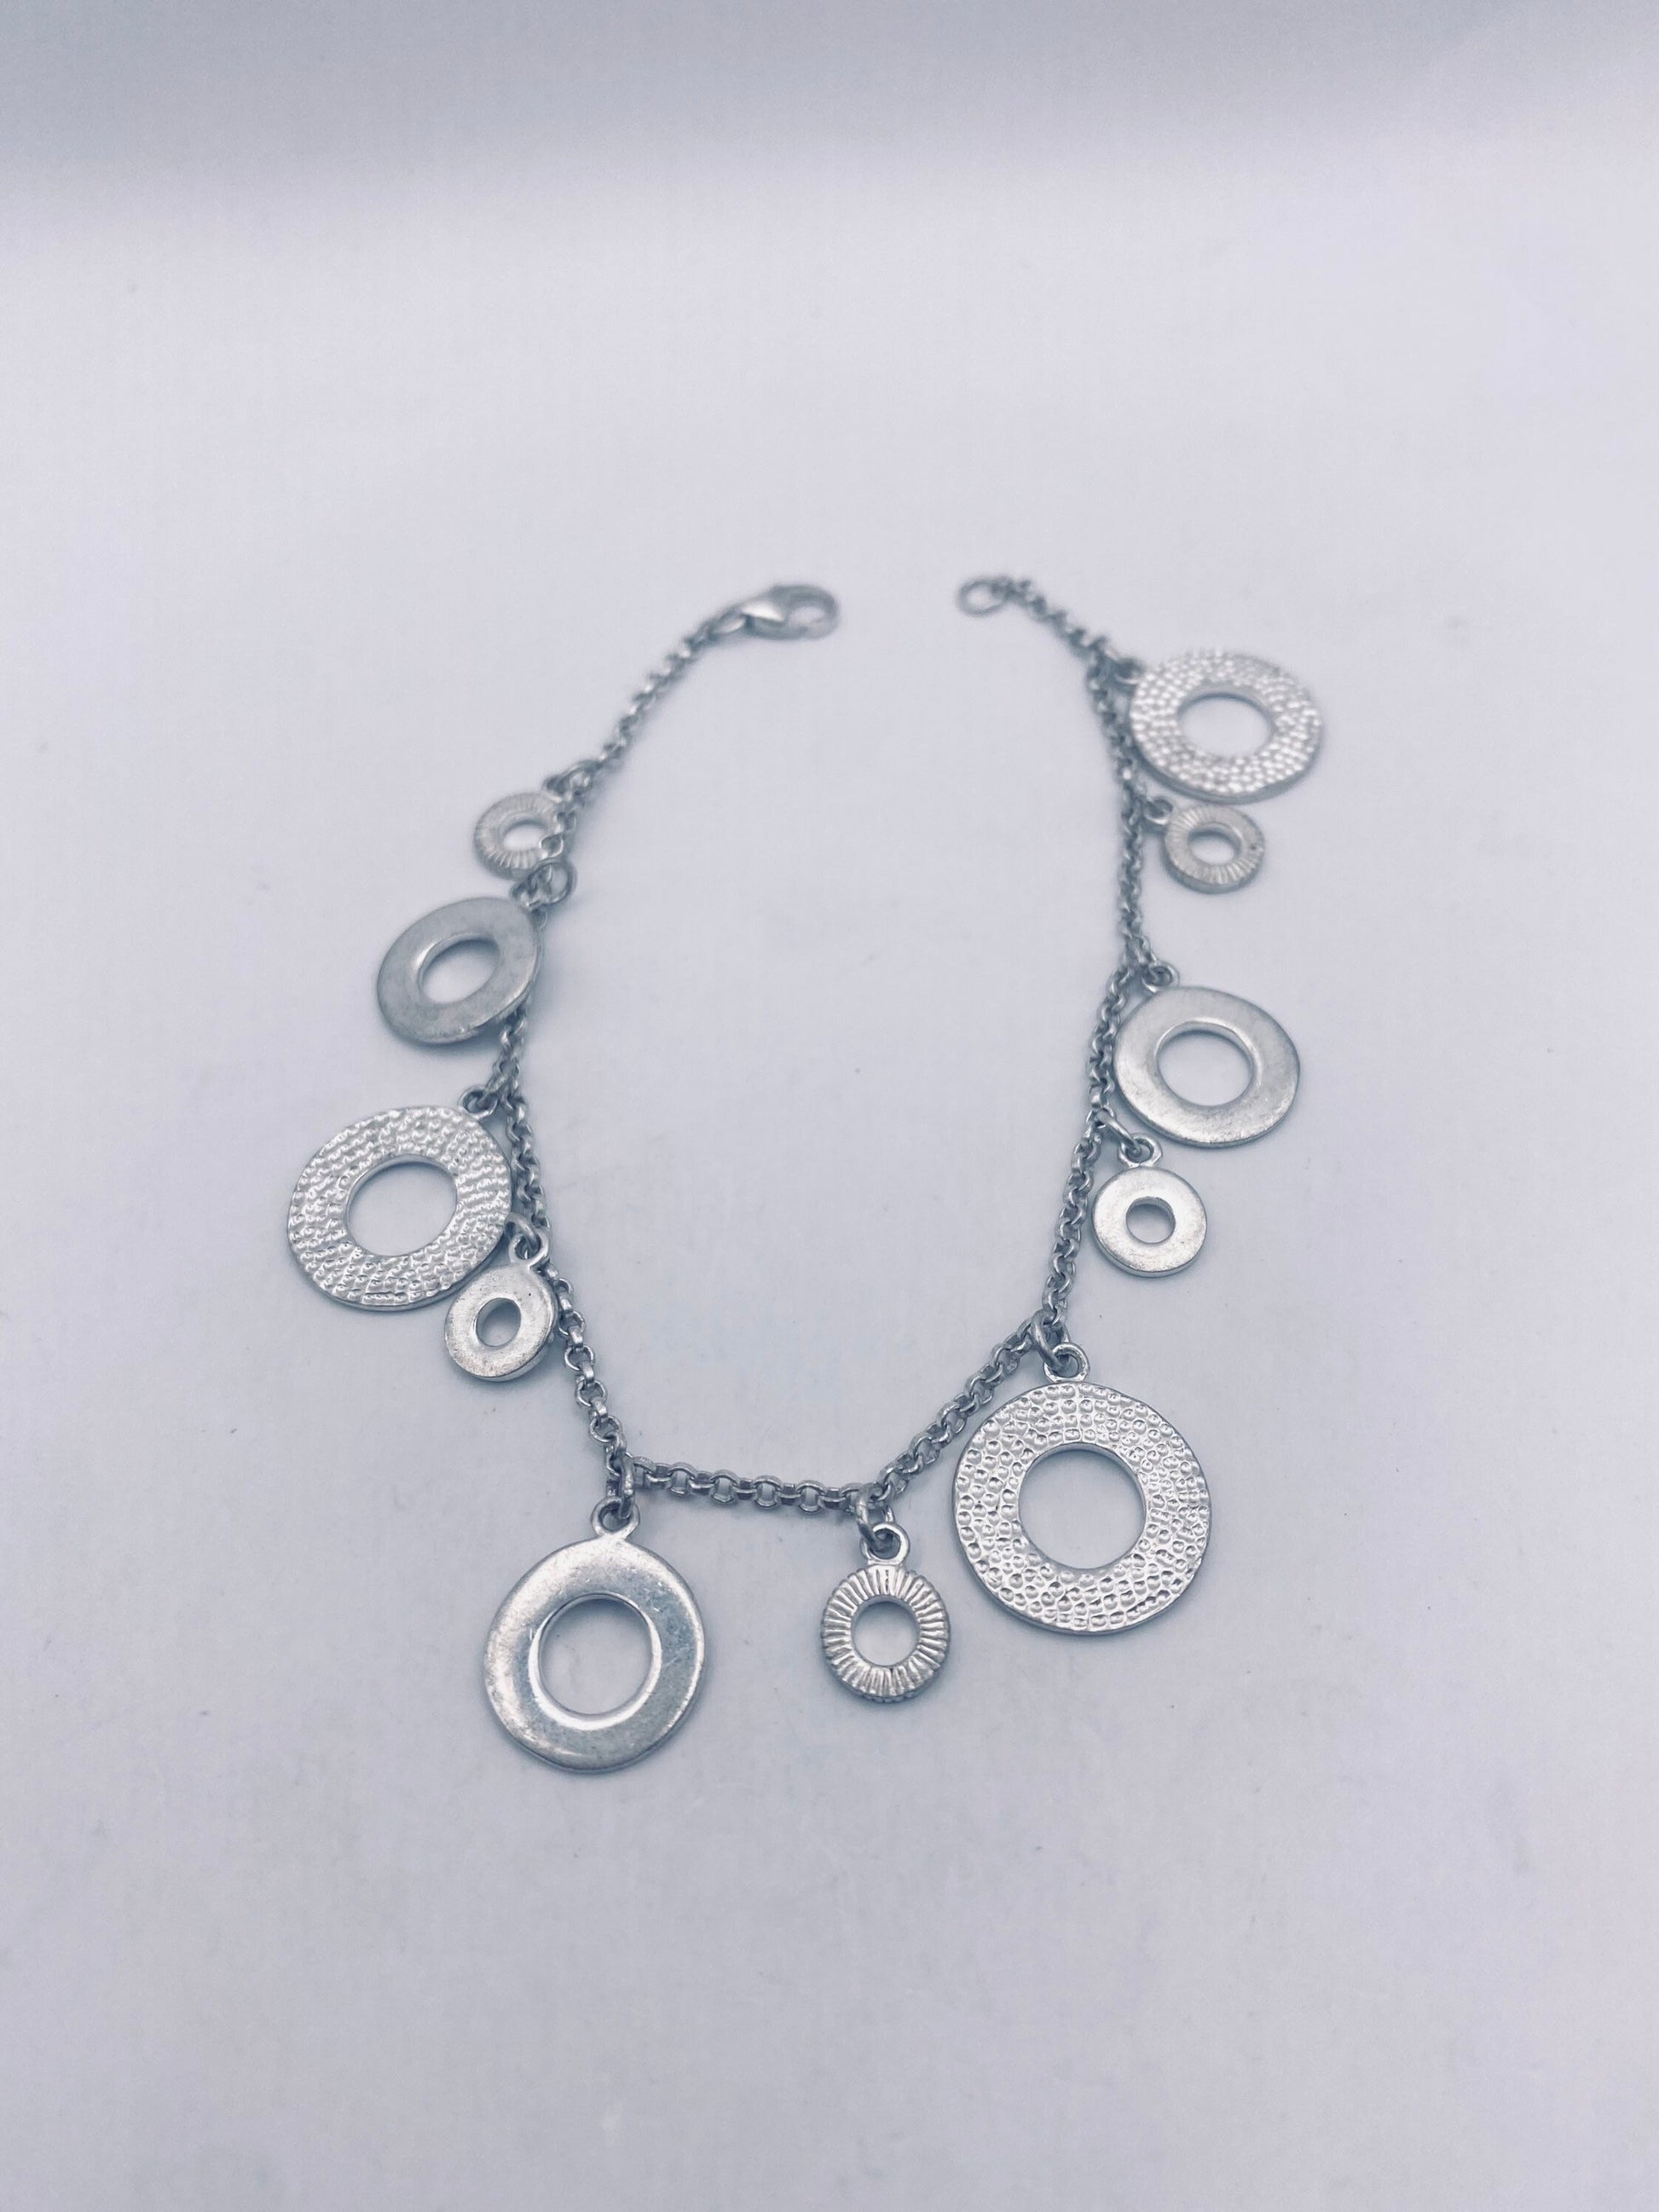 Vintage 925 Sterling Silver Chain Circle Link Charm Bracelet